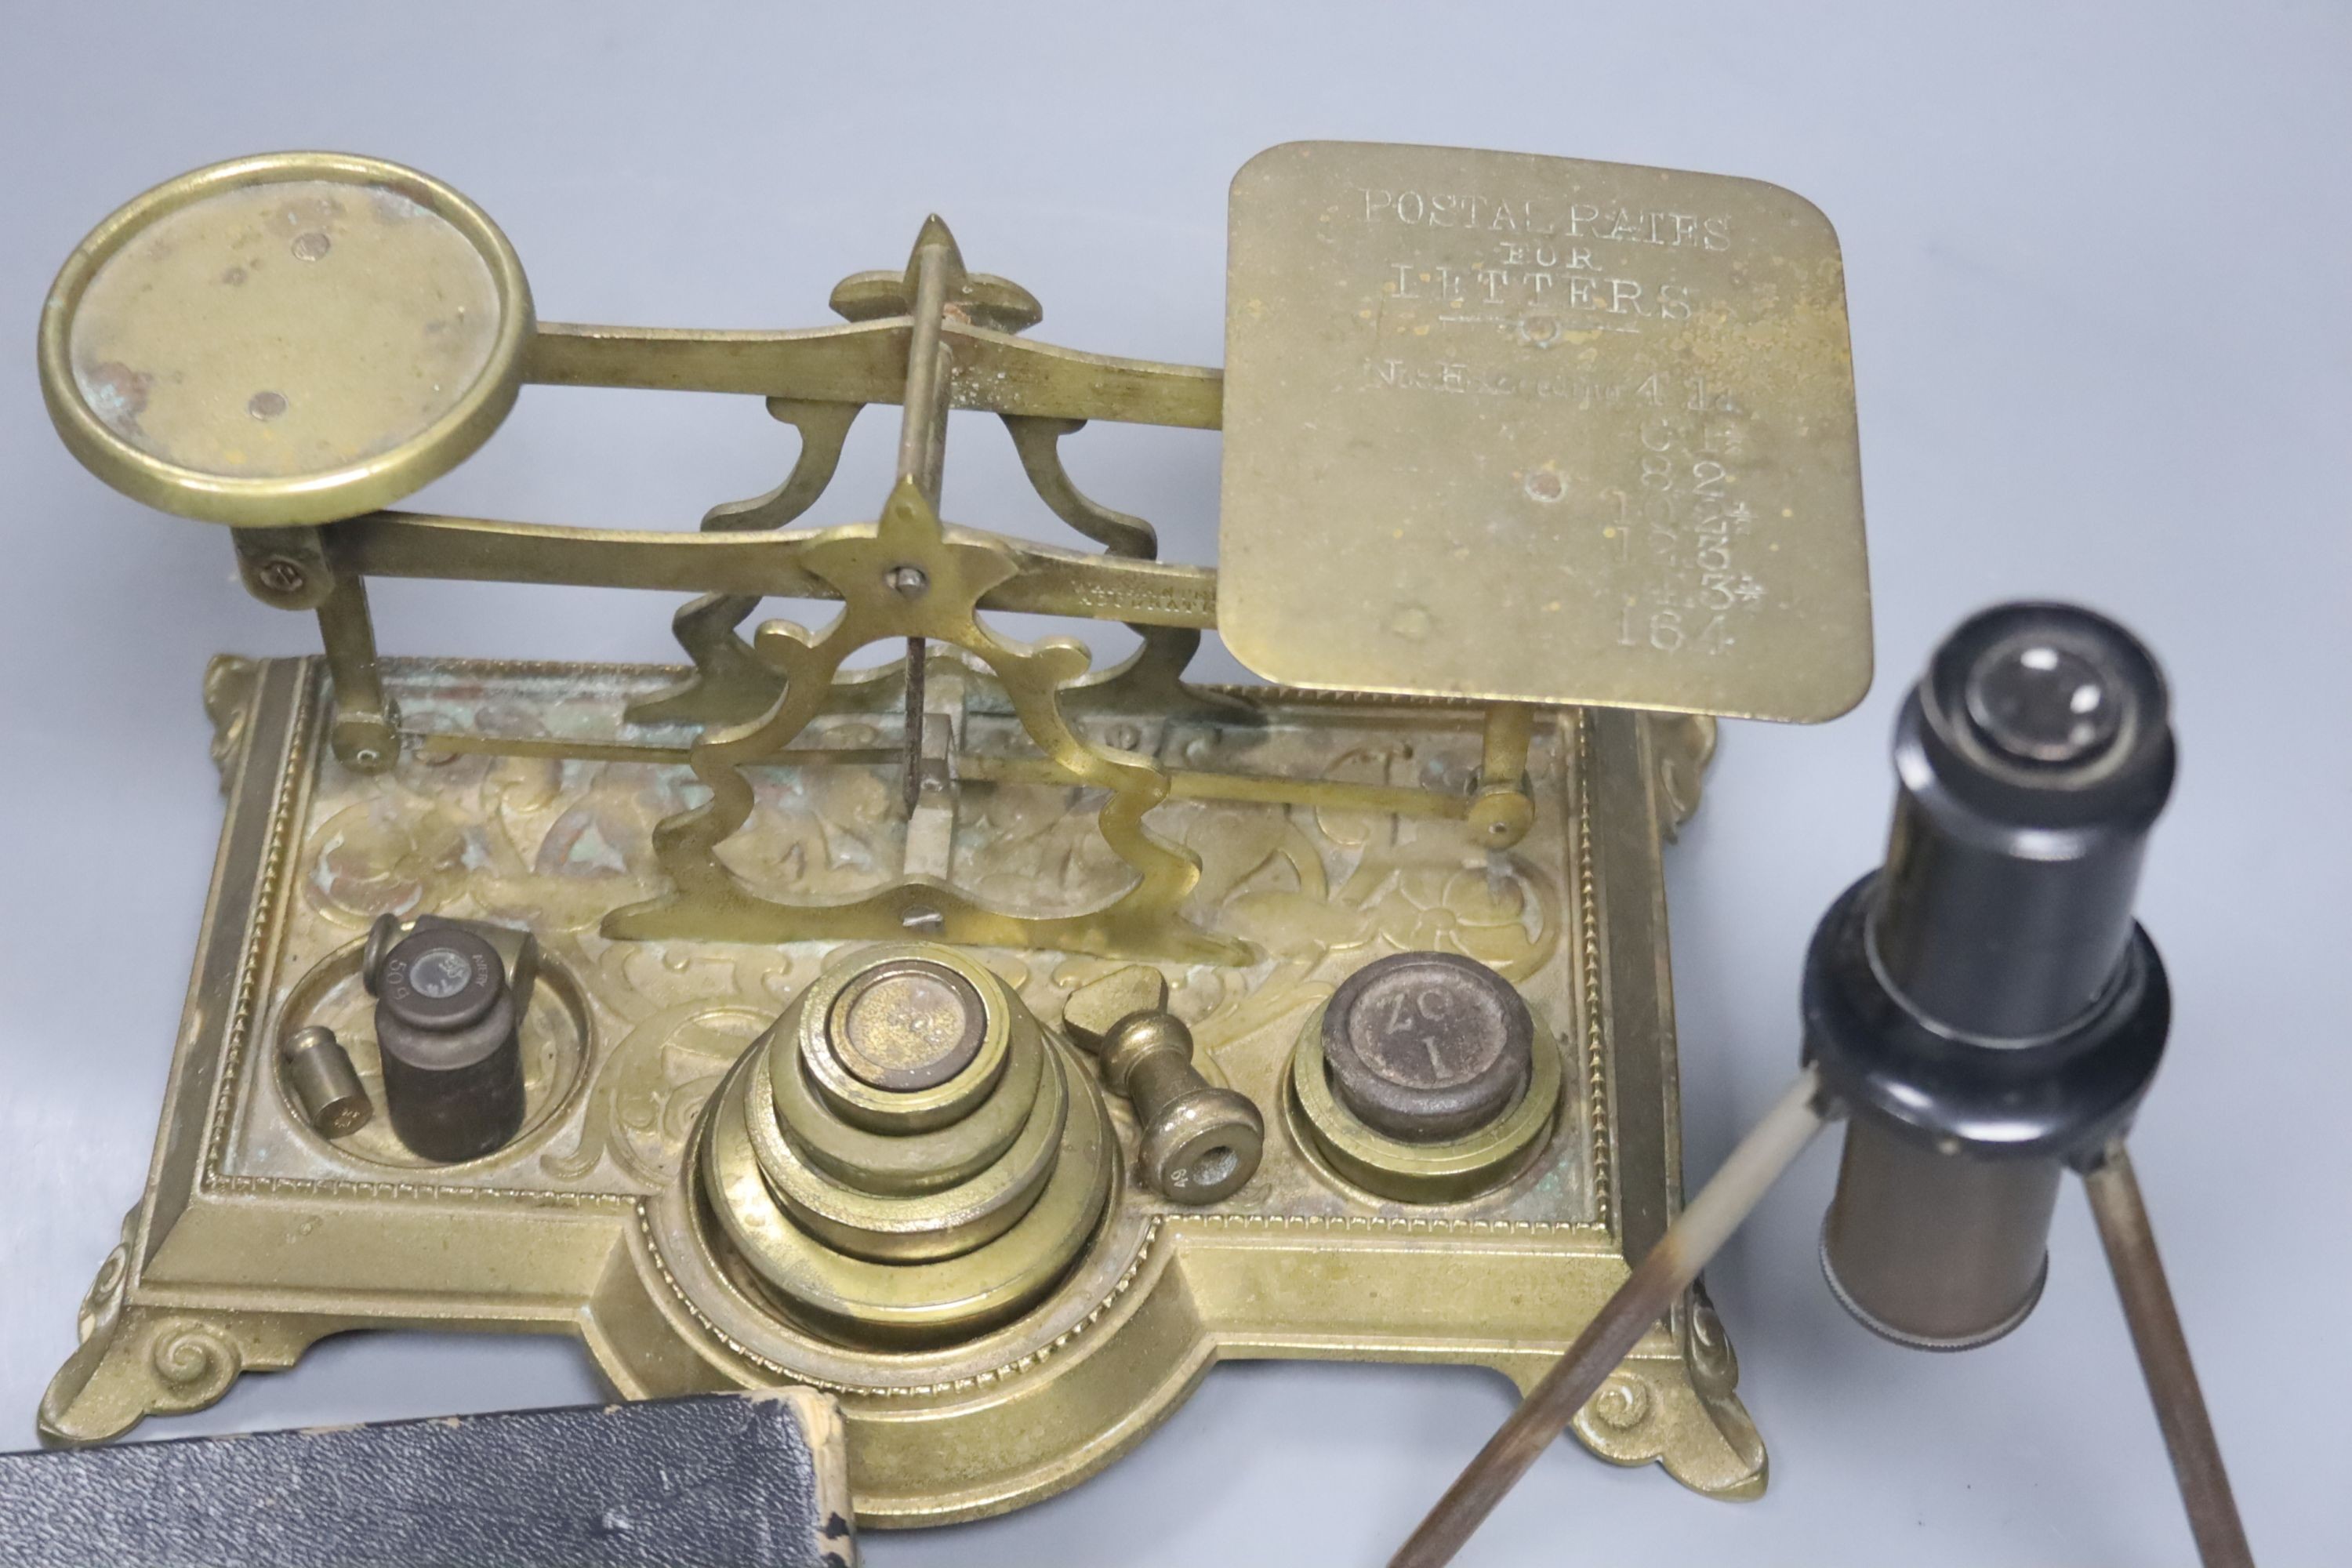 An Otis King's pocket calculator, a Voigtlander scope and brass postal scales